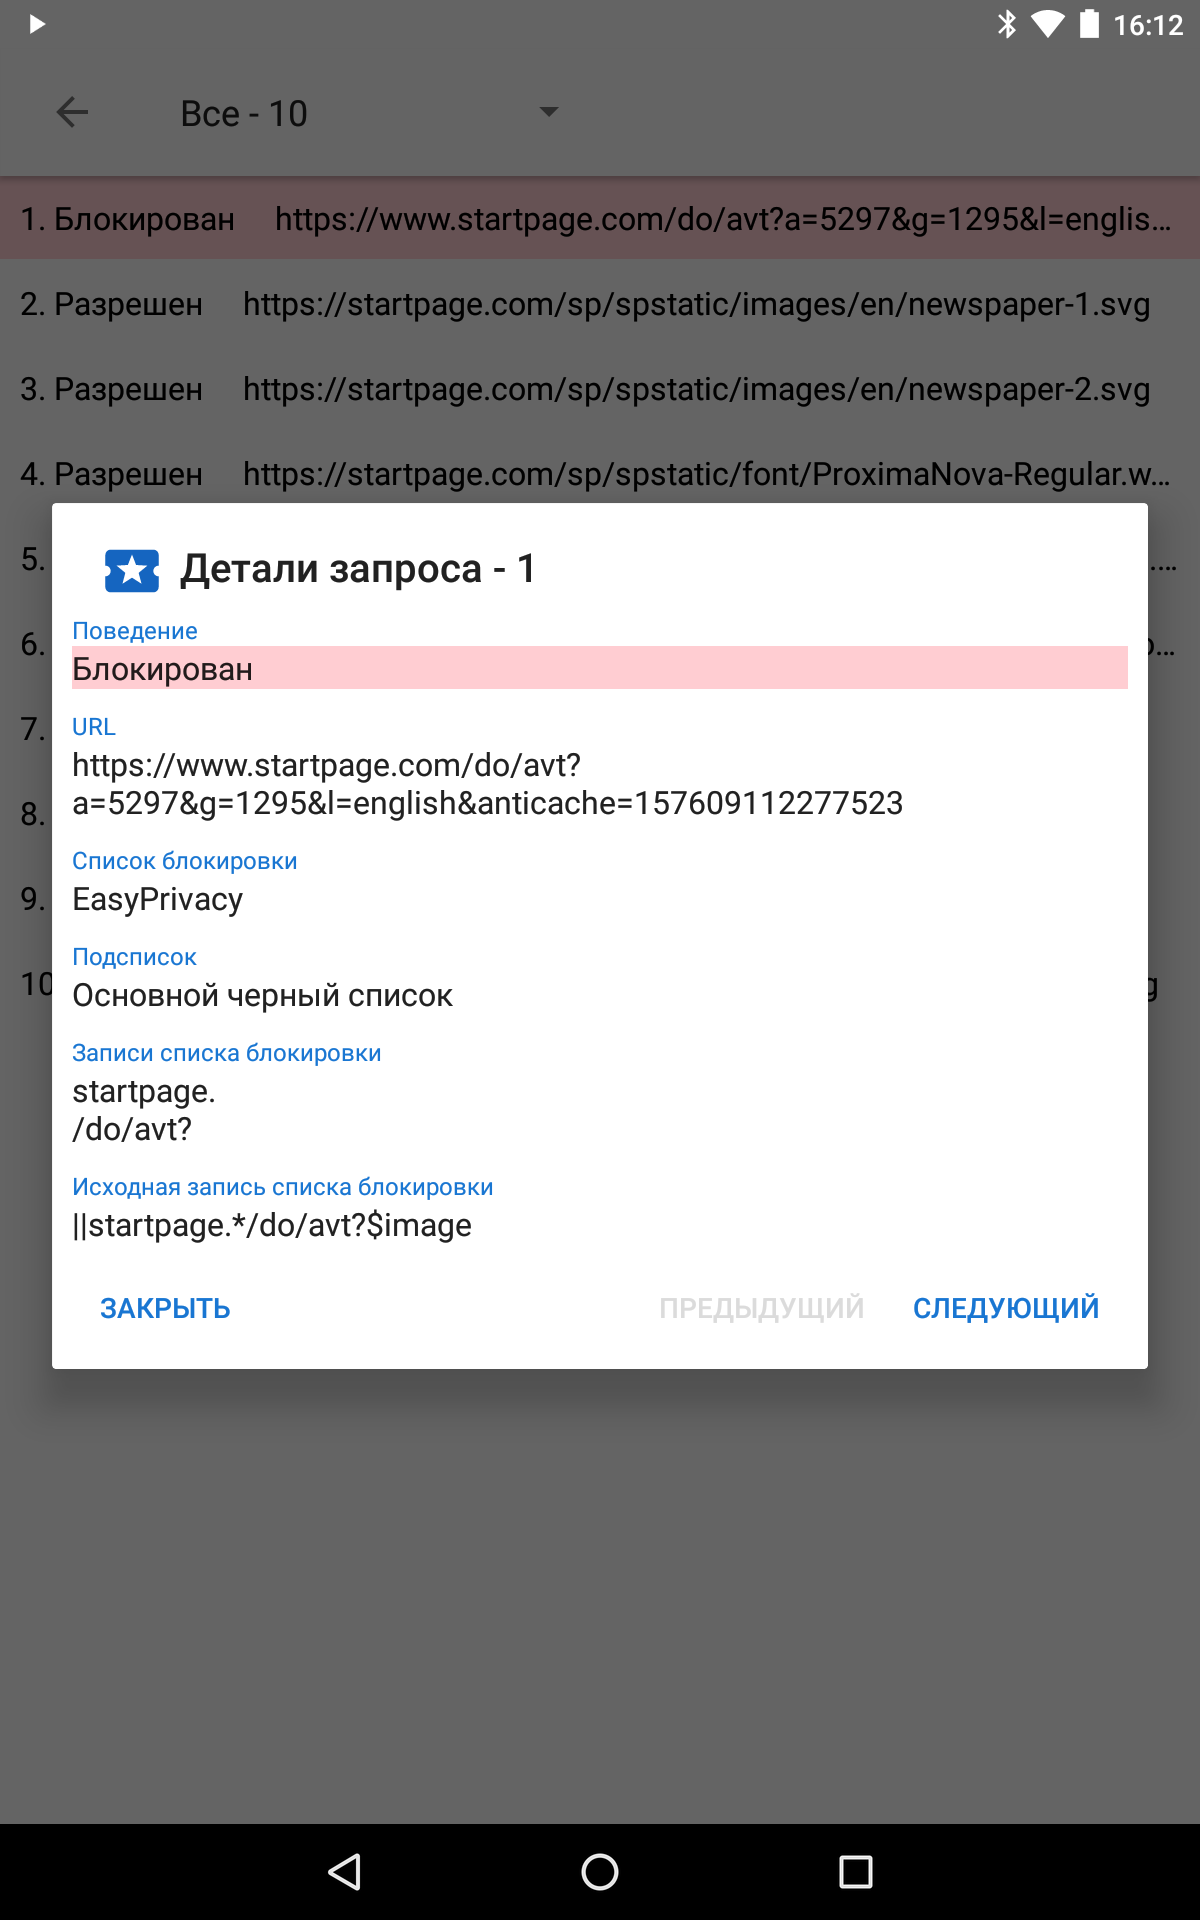 fastlane/metadata/android/ru-RU/images/sevenInchScreenshots/02-RequestDetails.png